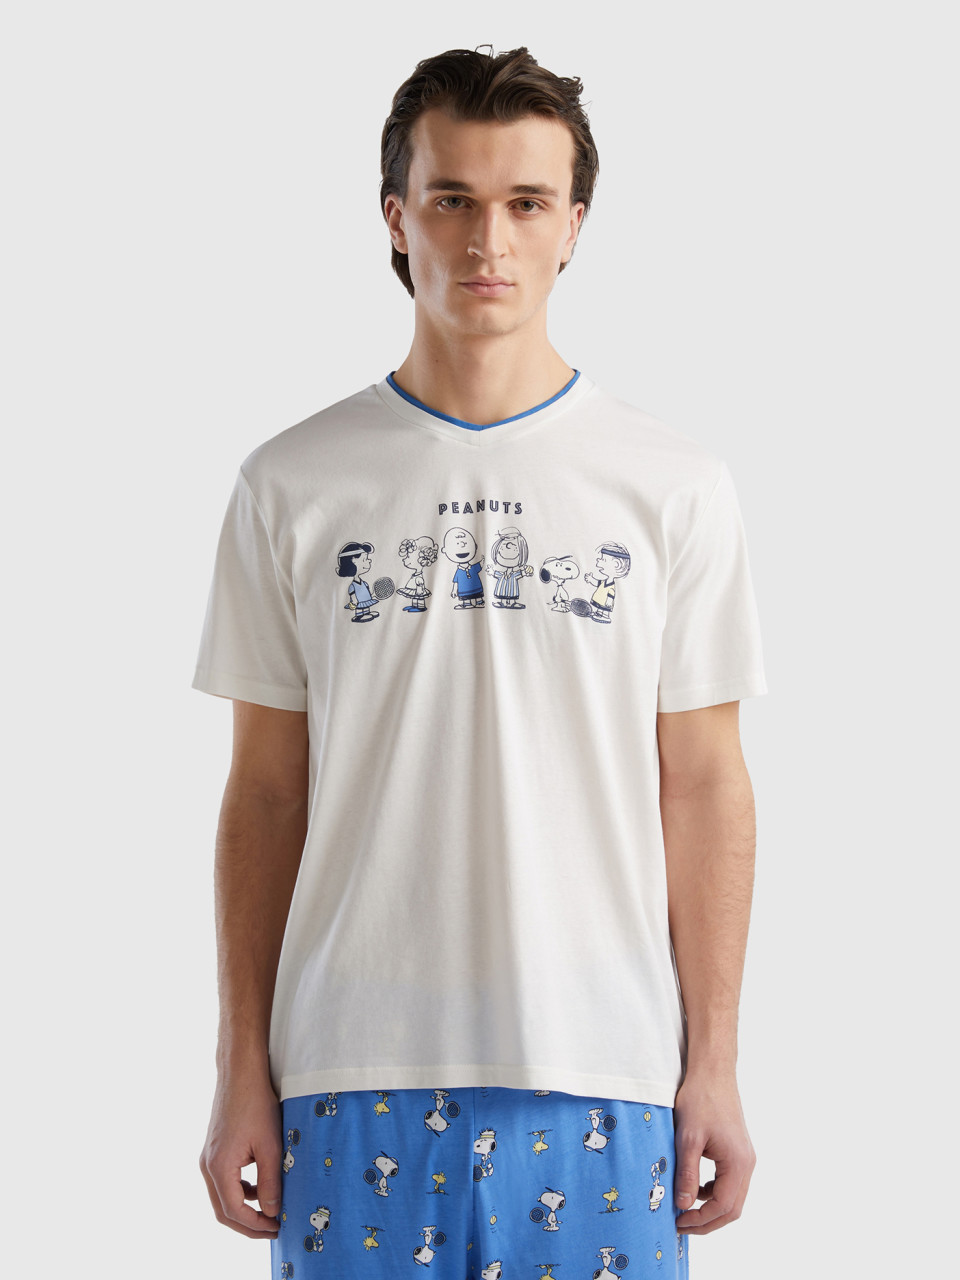 Benetton, Lightweight ©peanuts T-shirt, Creamy White, Men